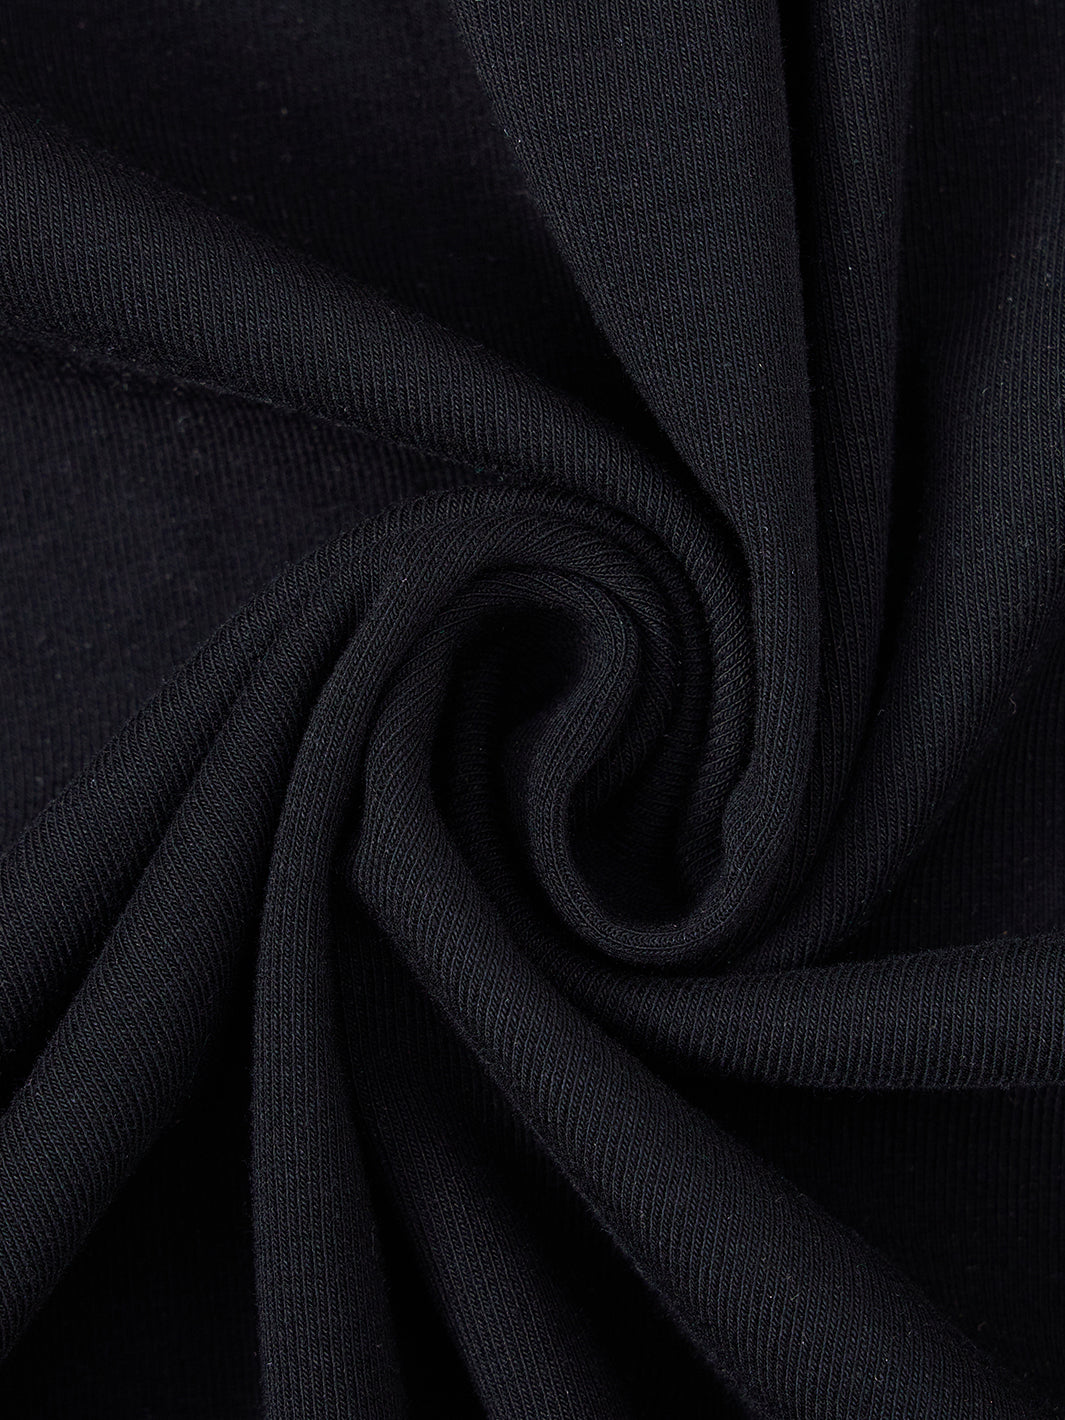 Jumper Emblem Robe - Black